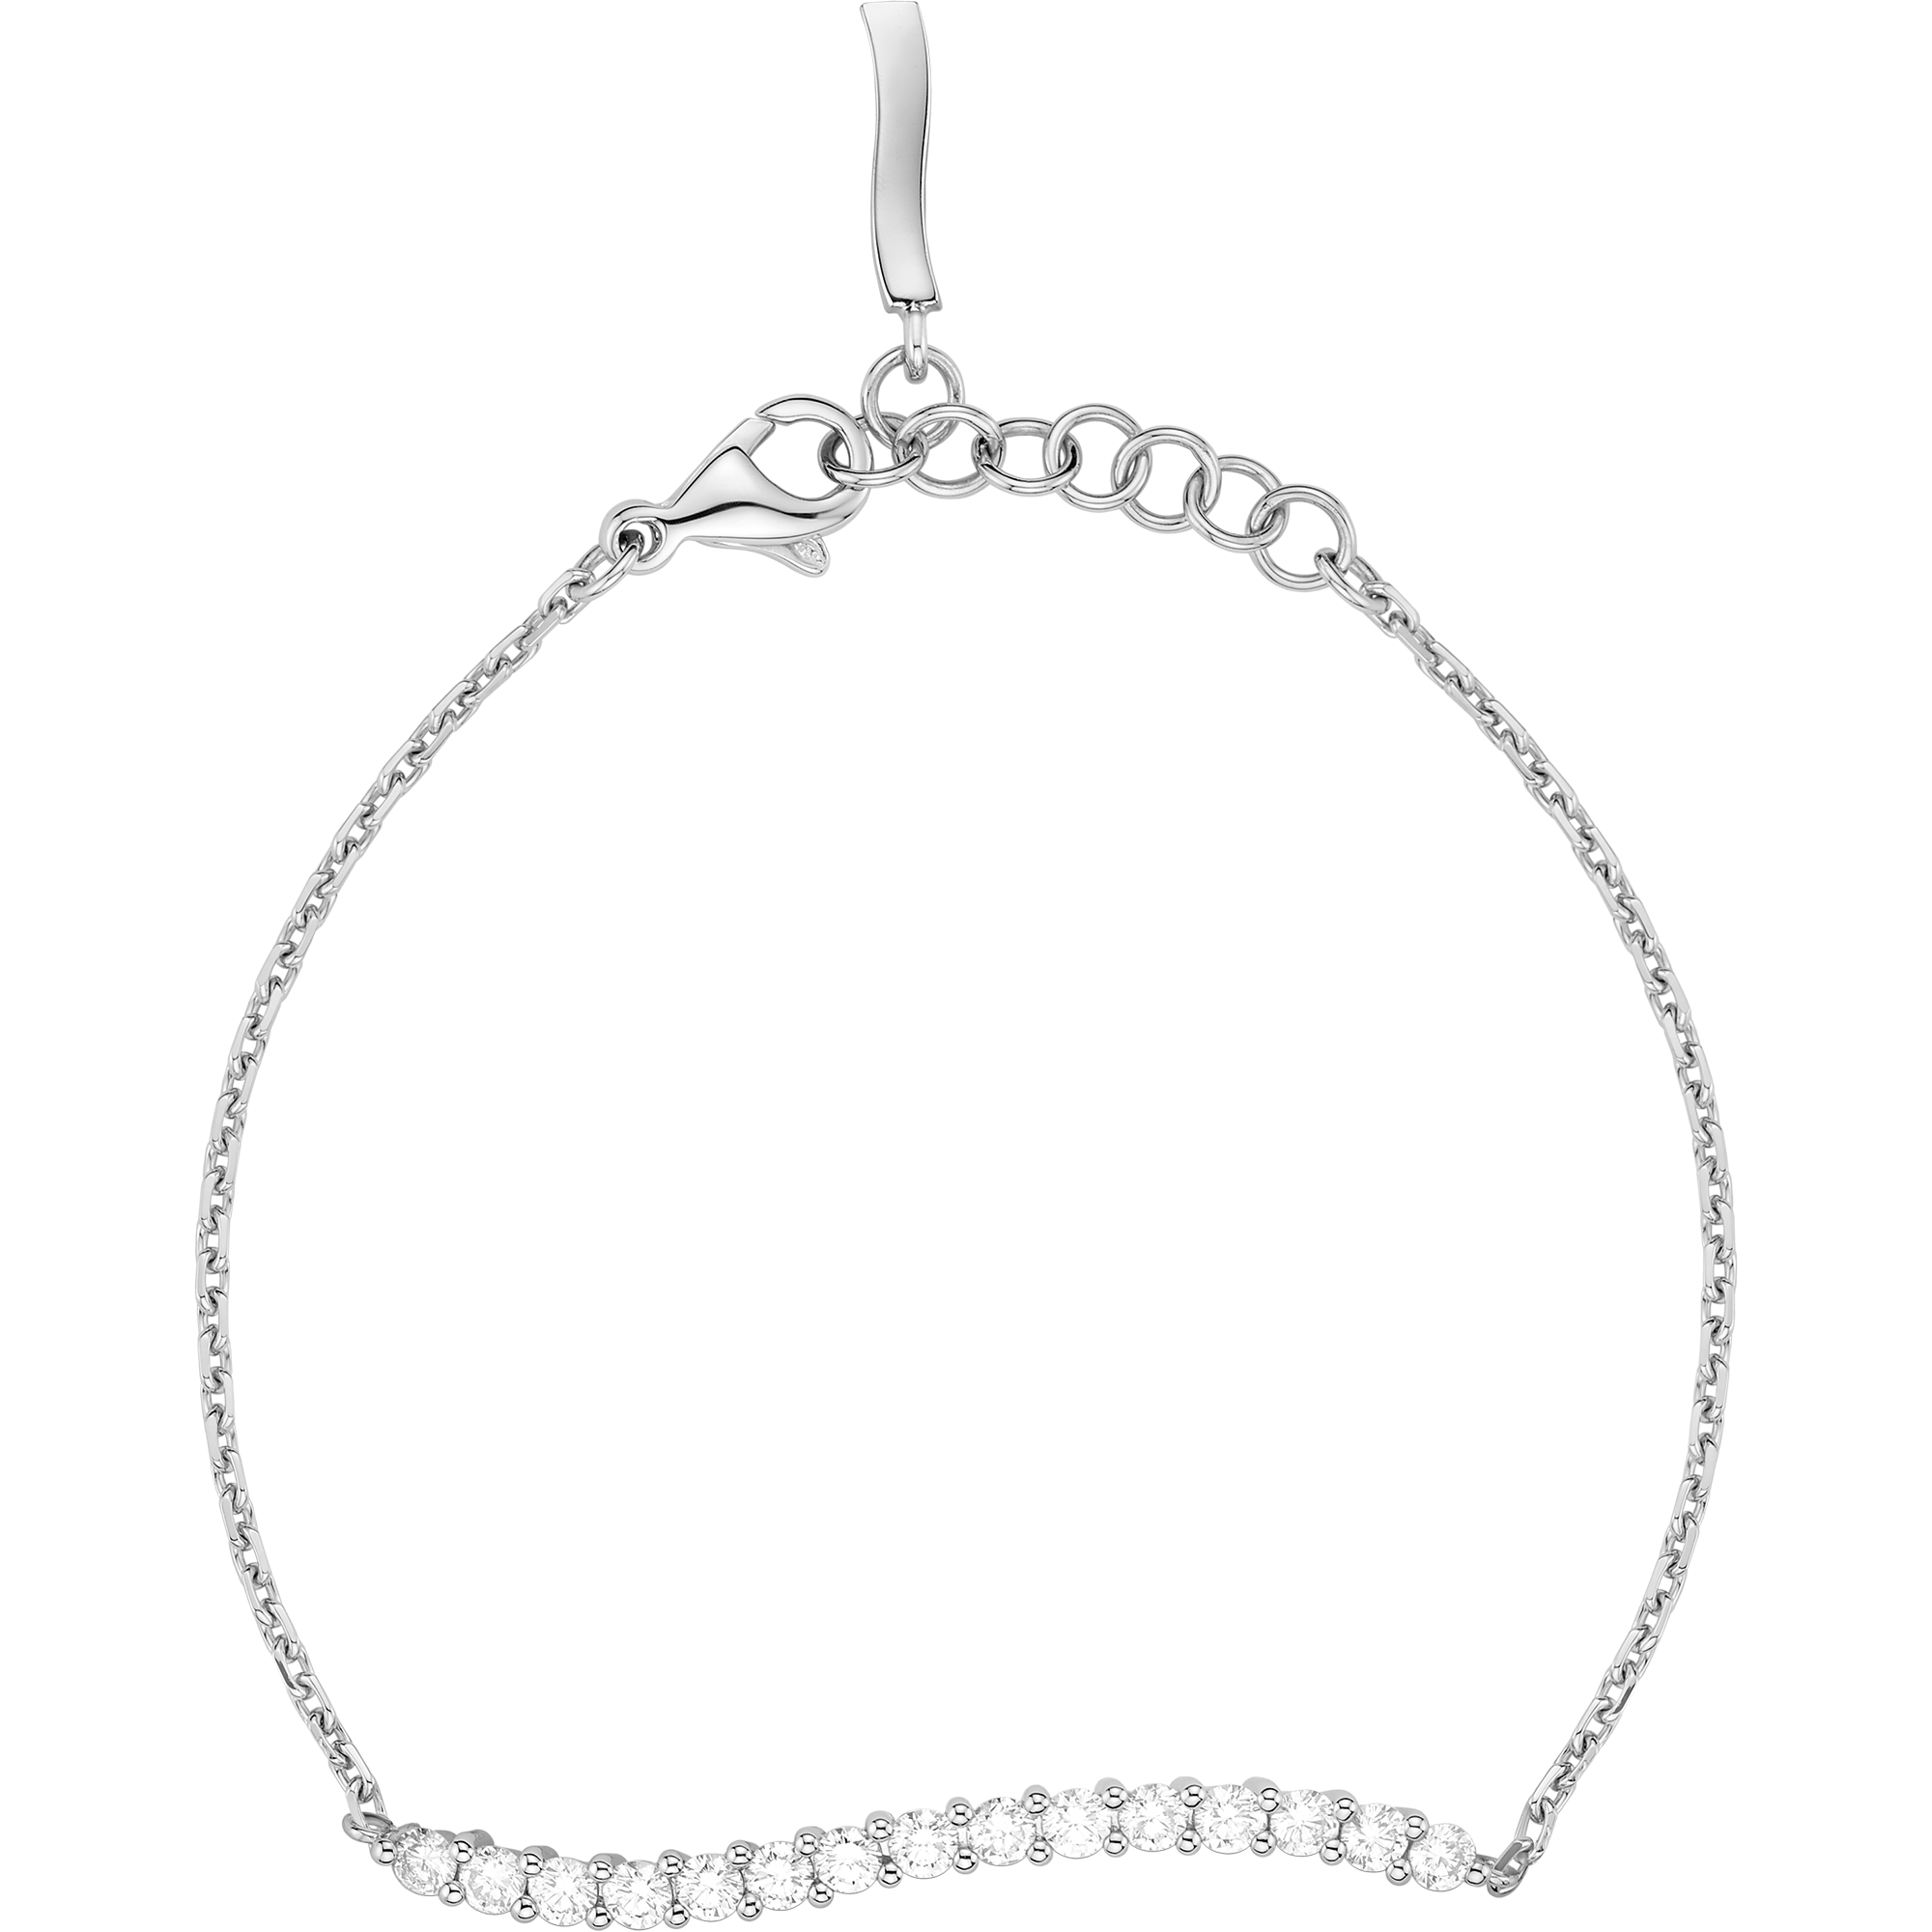 Aqua Swing Bracelet, 18K white gold, Diamonds - B605BC0100205